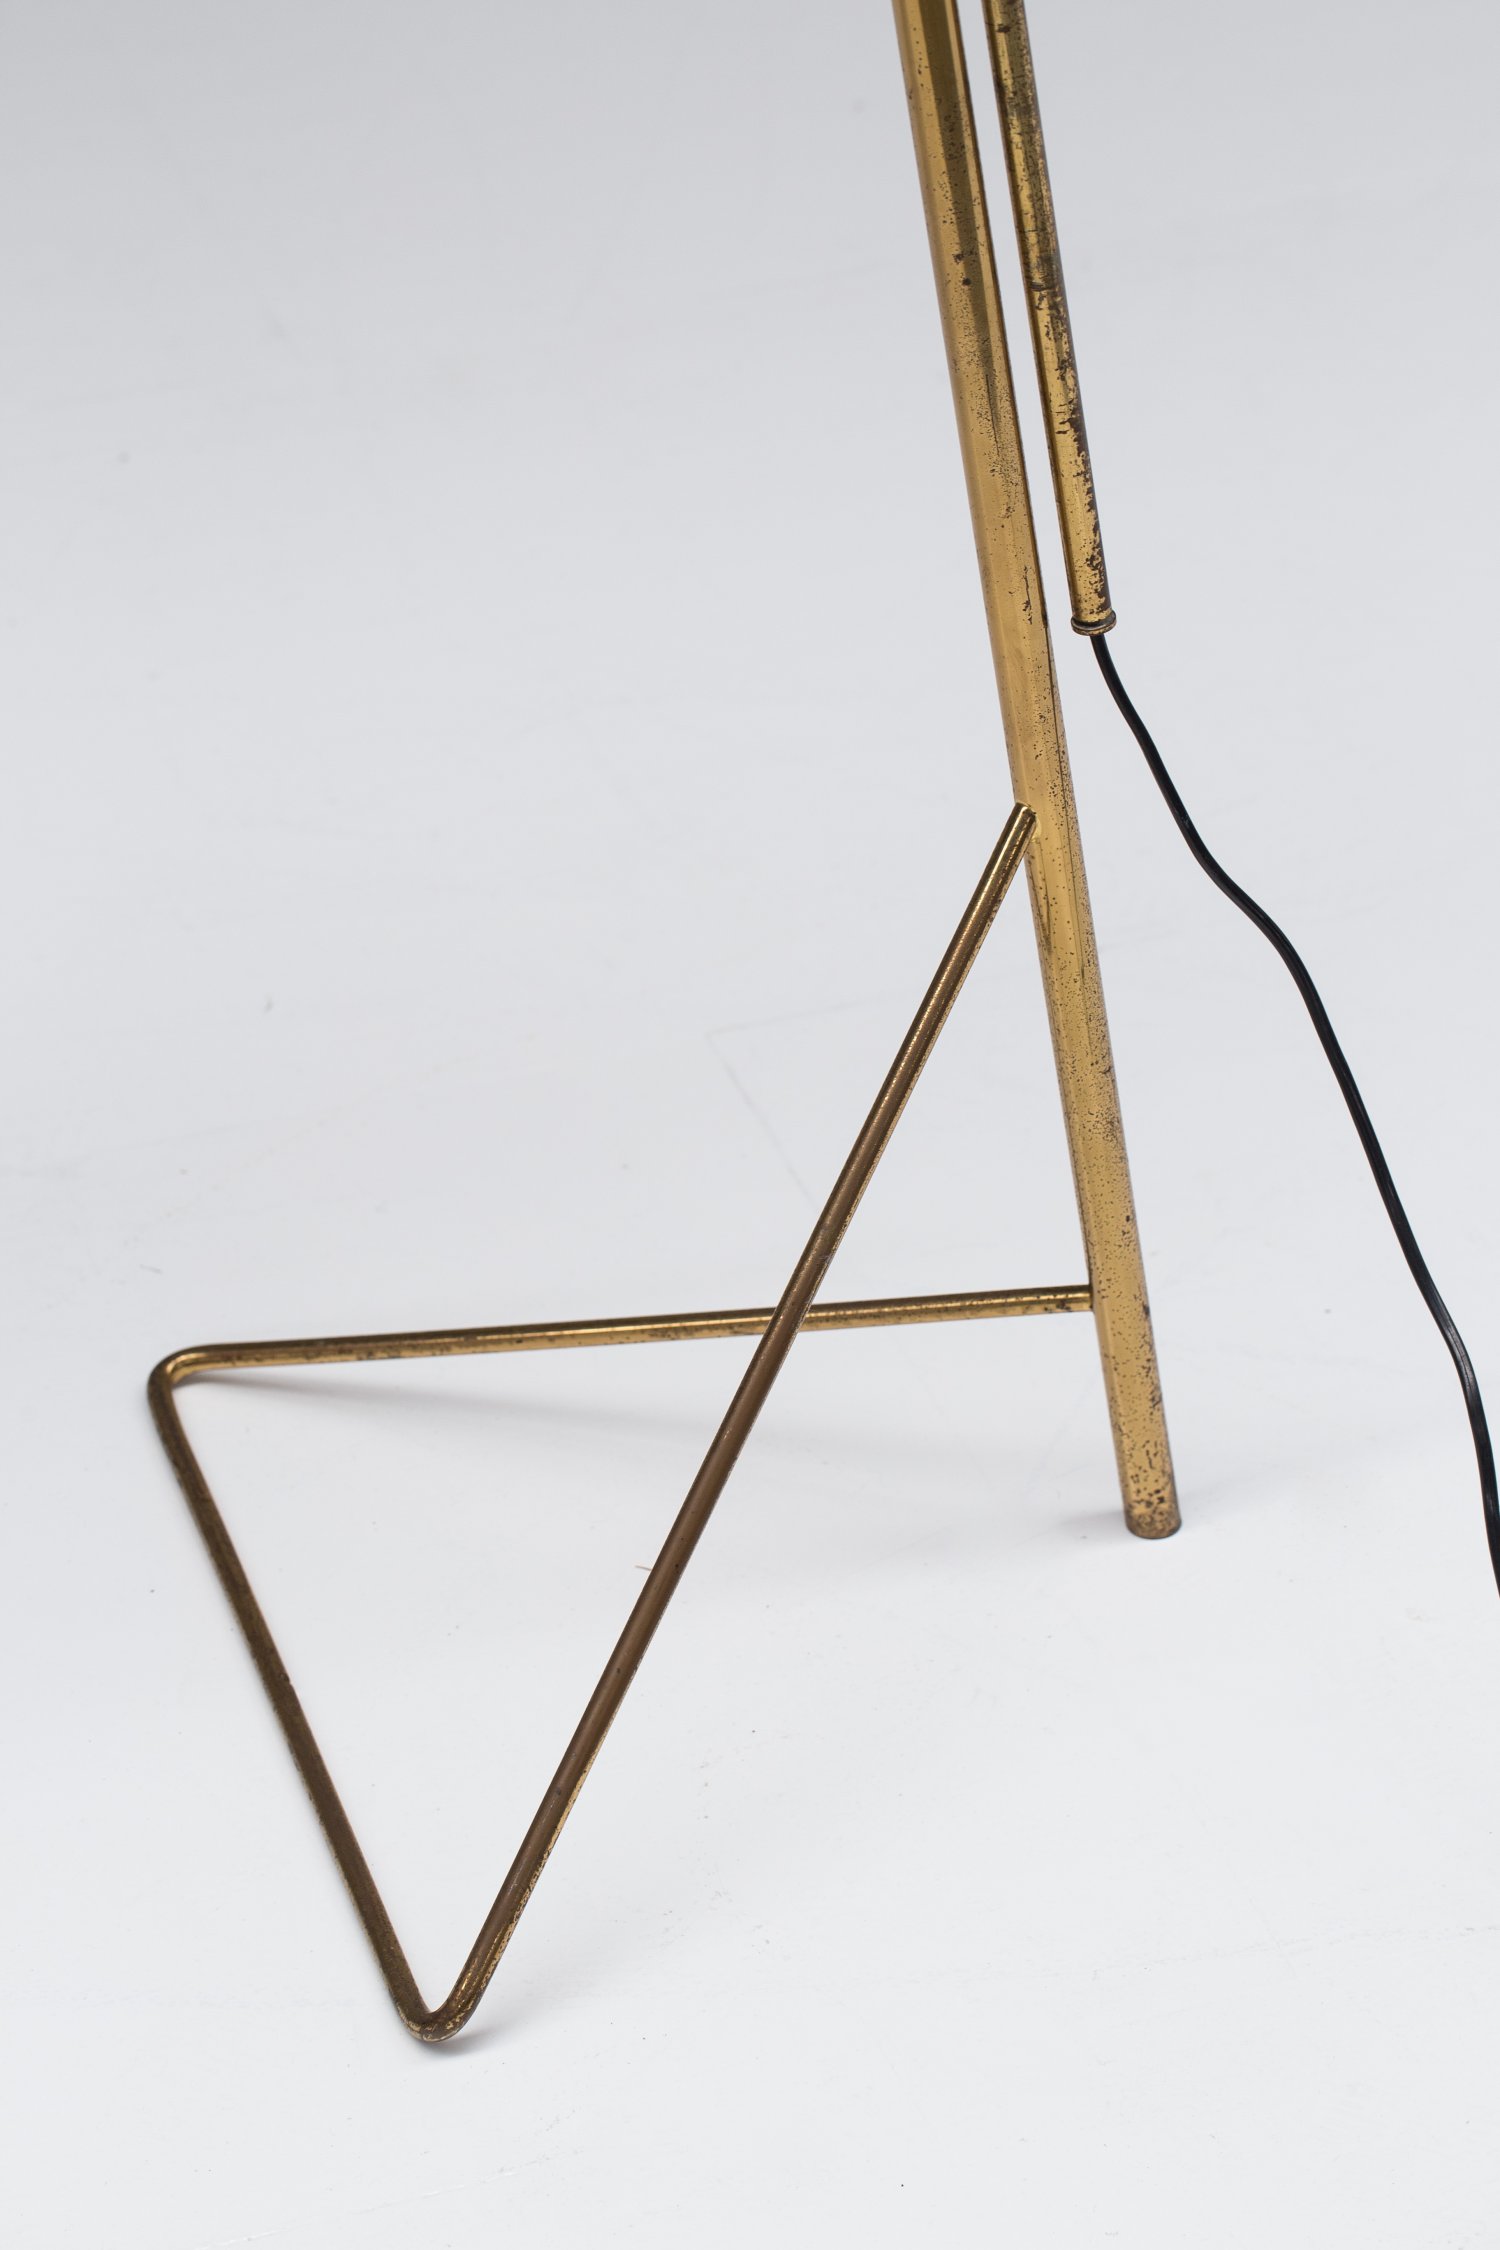 Model 1045 by Gino Sarfatti for Arteluce